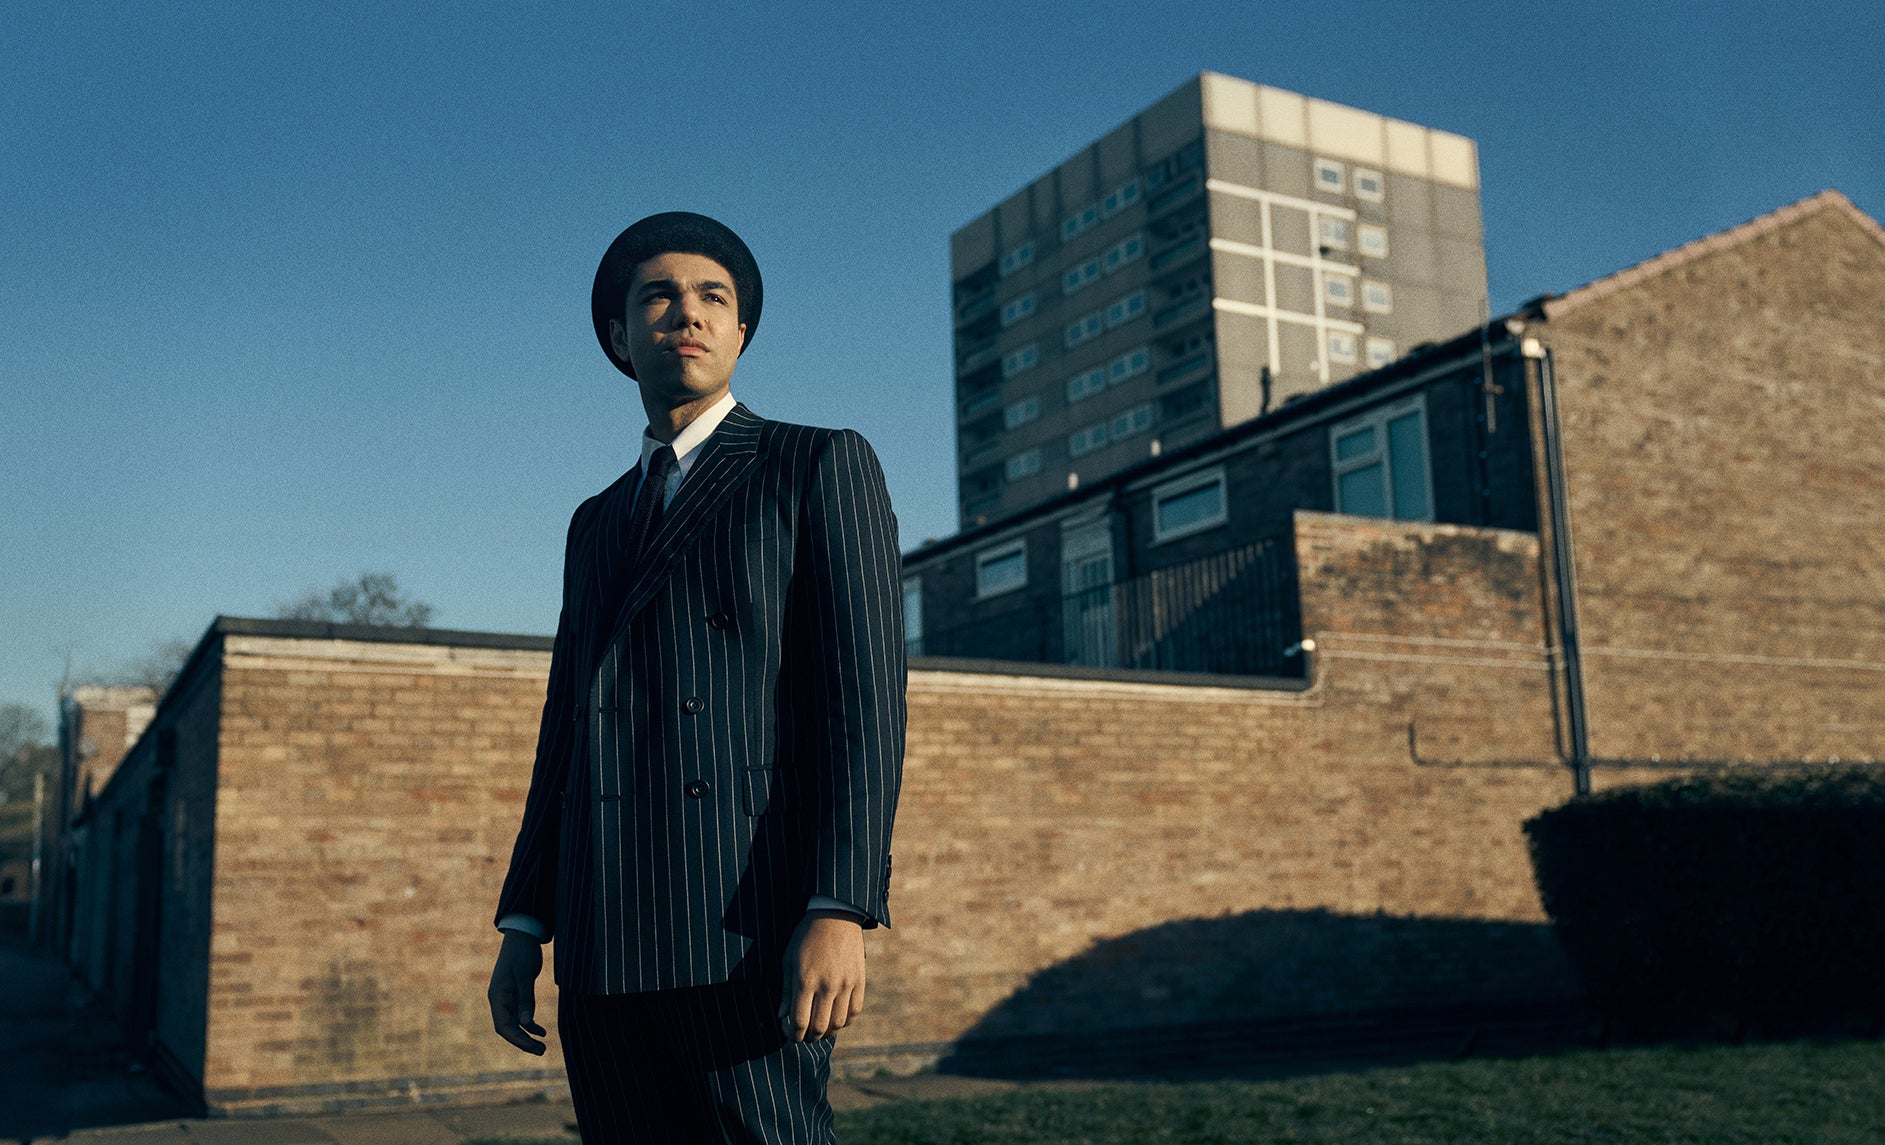 Tower blocks in Birmingham backdrop Steven Knight’s new drama